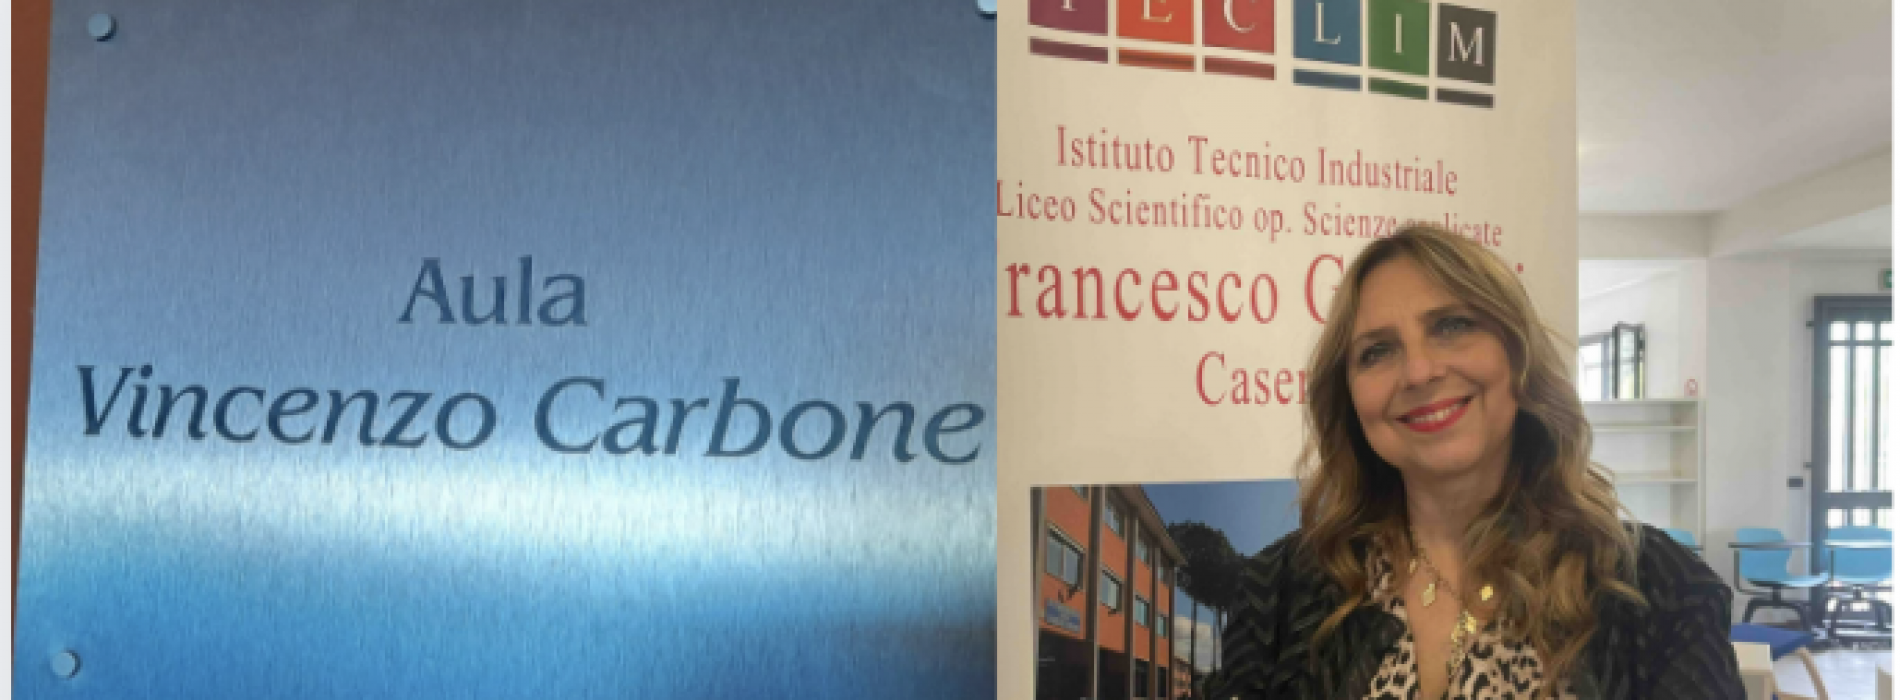 Aula Vincenzo Carbone, l’Itis Giordani ricorda il generoso prof